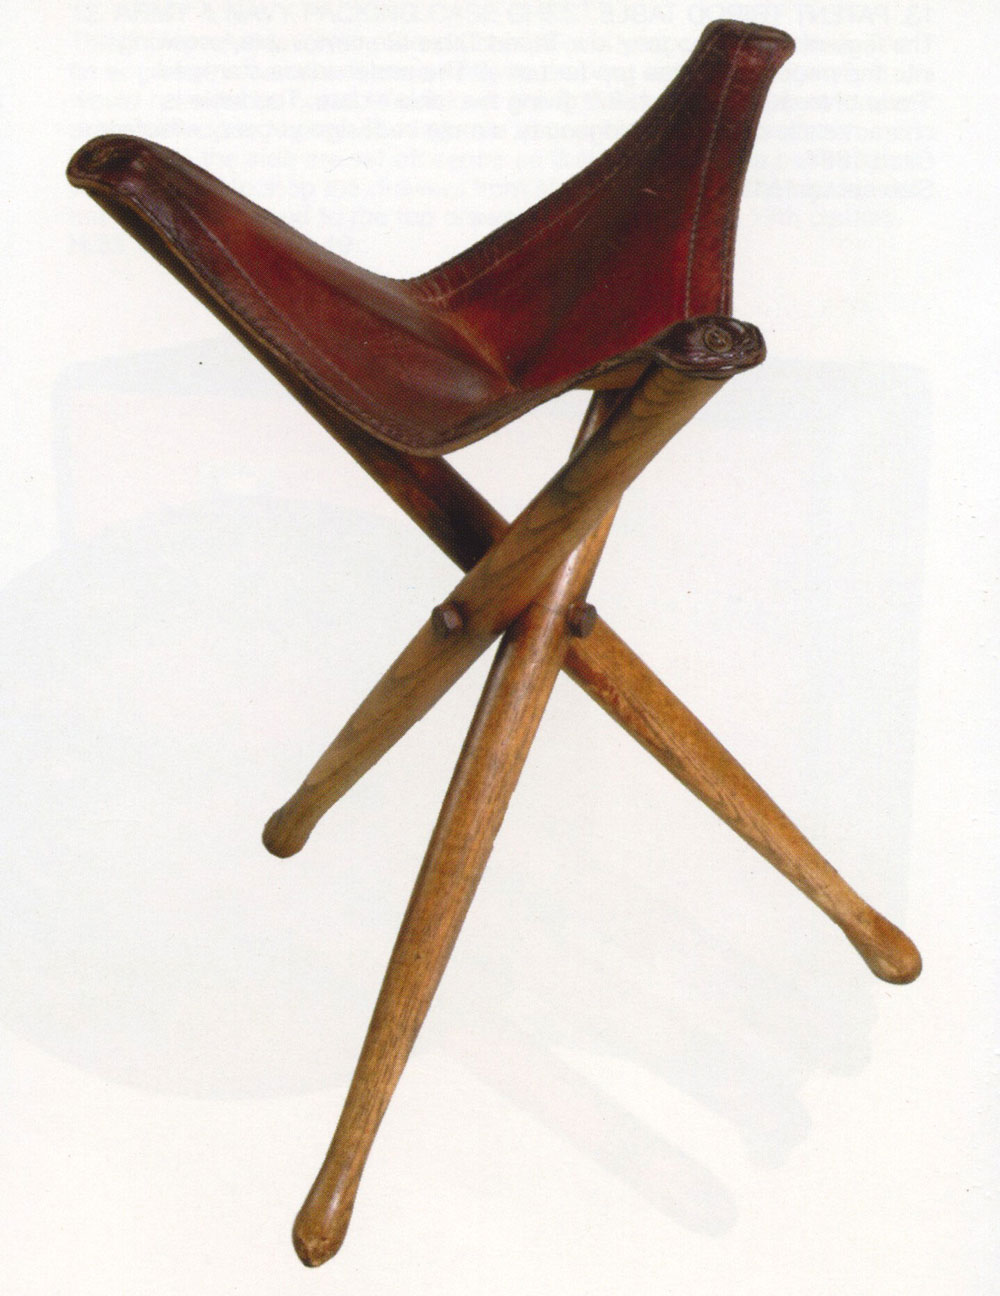  Stool Plans Wooden three legged stool woodworking plans plans pdf